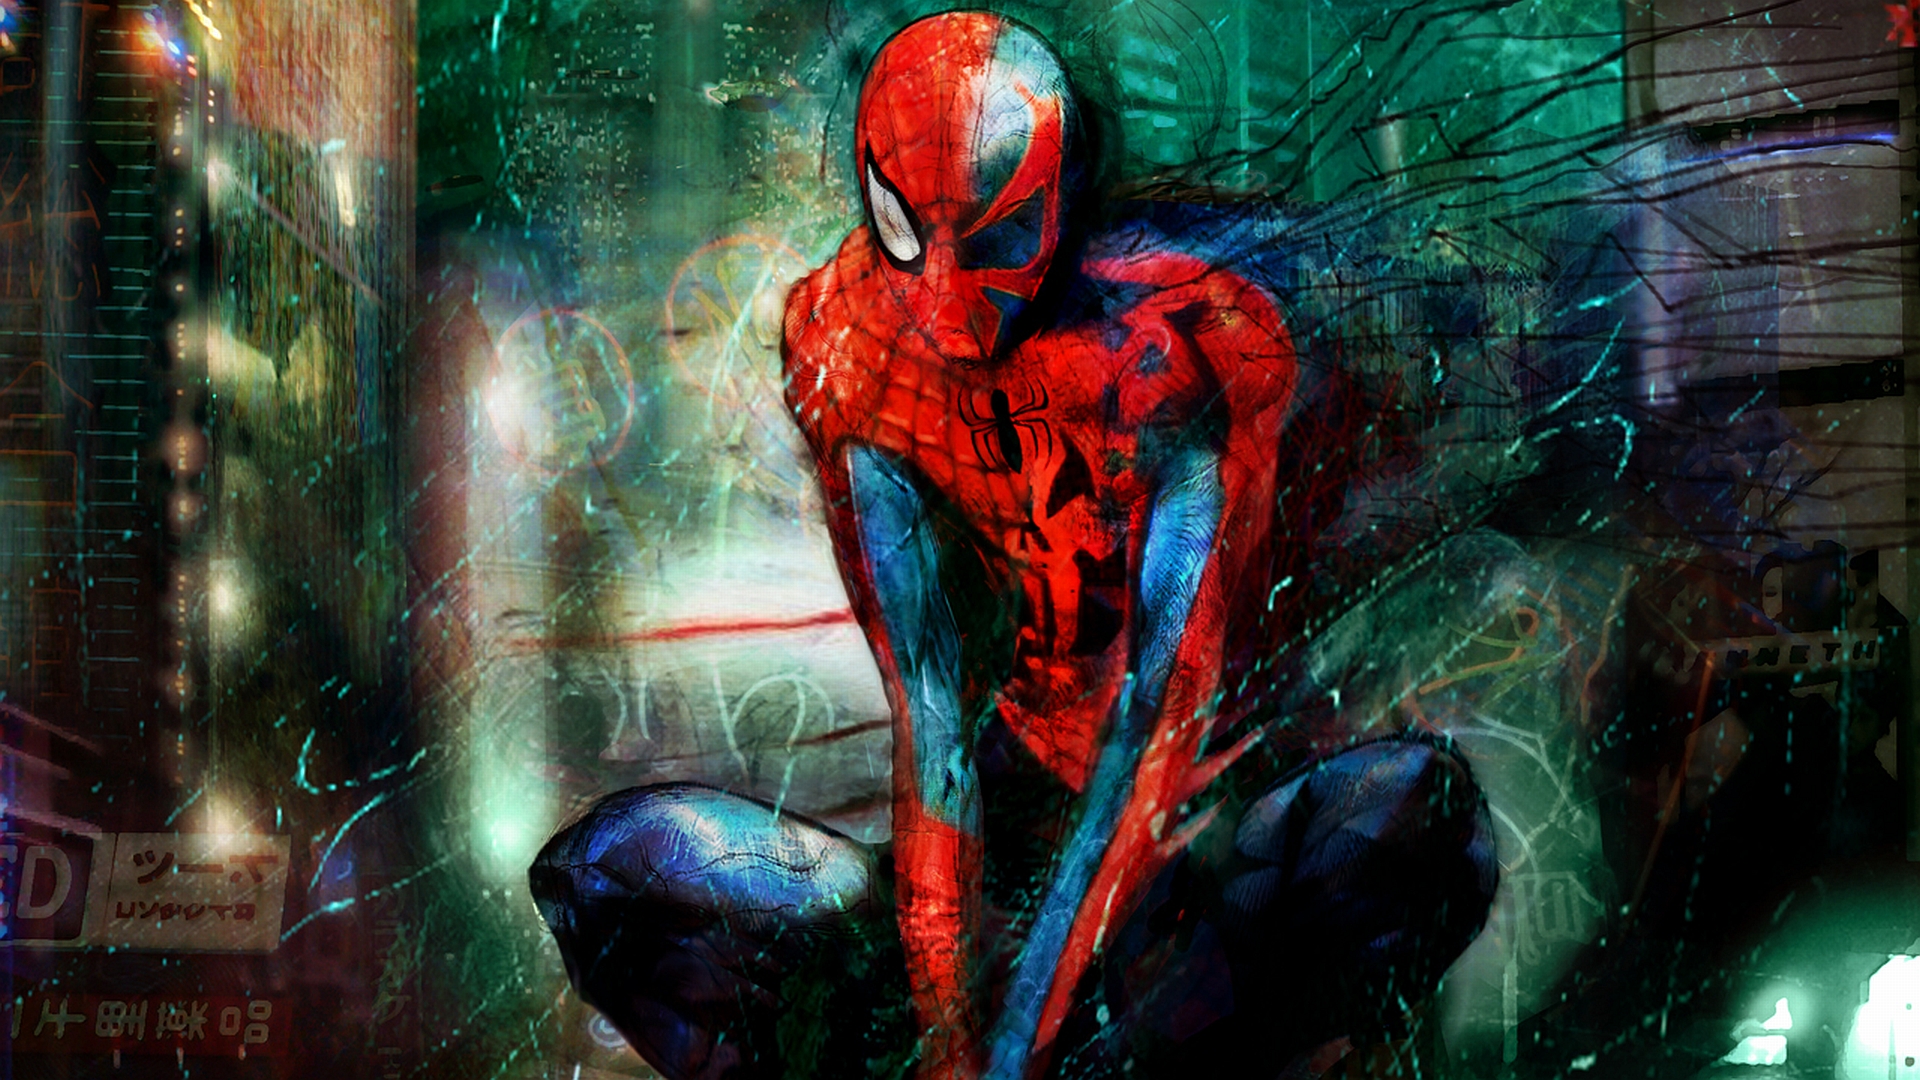 Spider man wallpaper hd